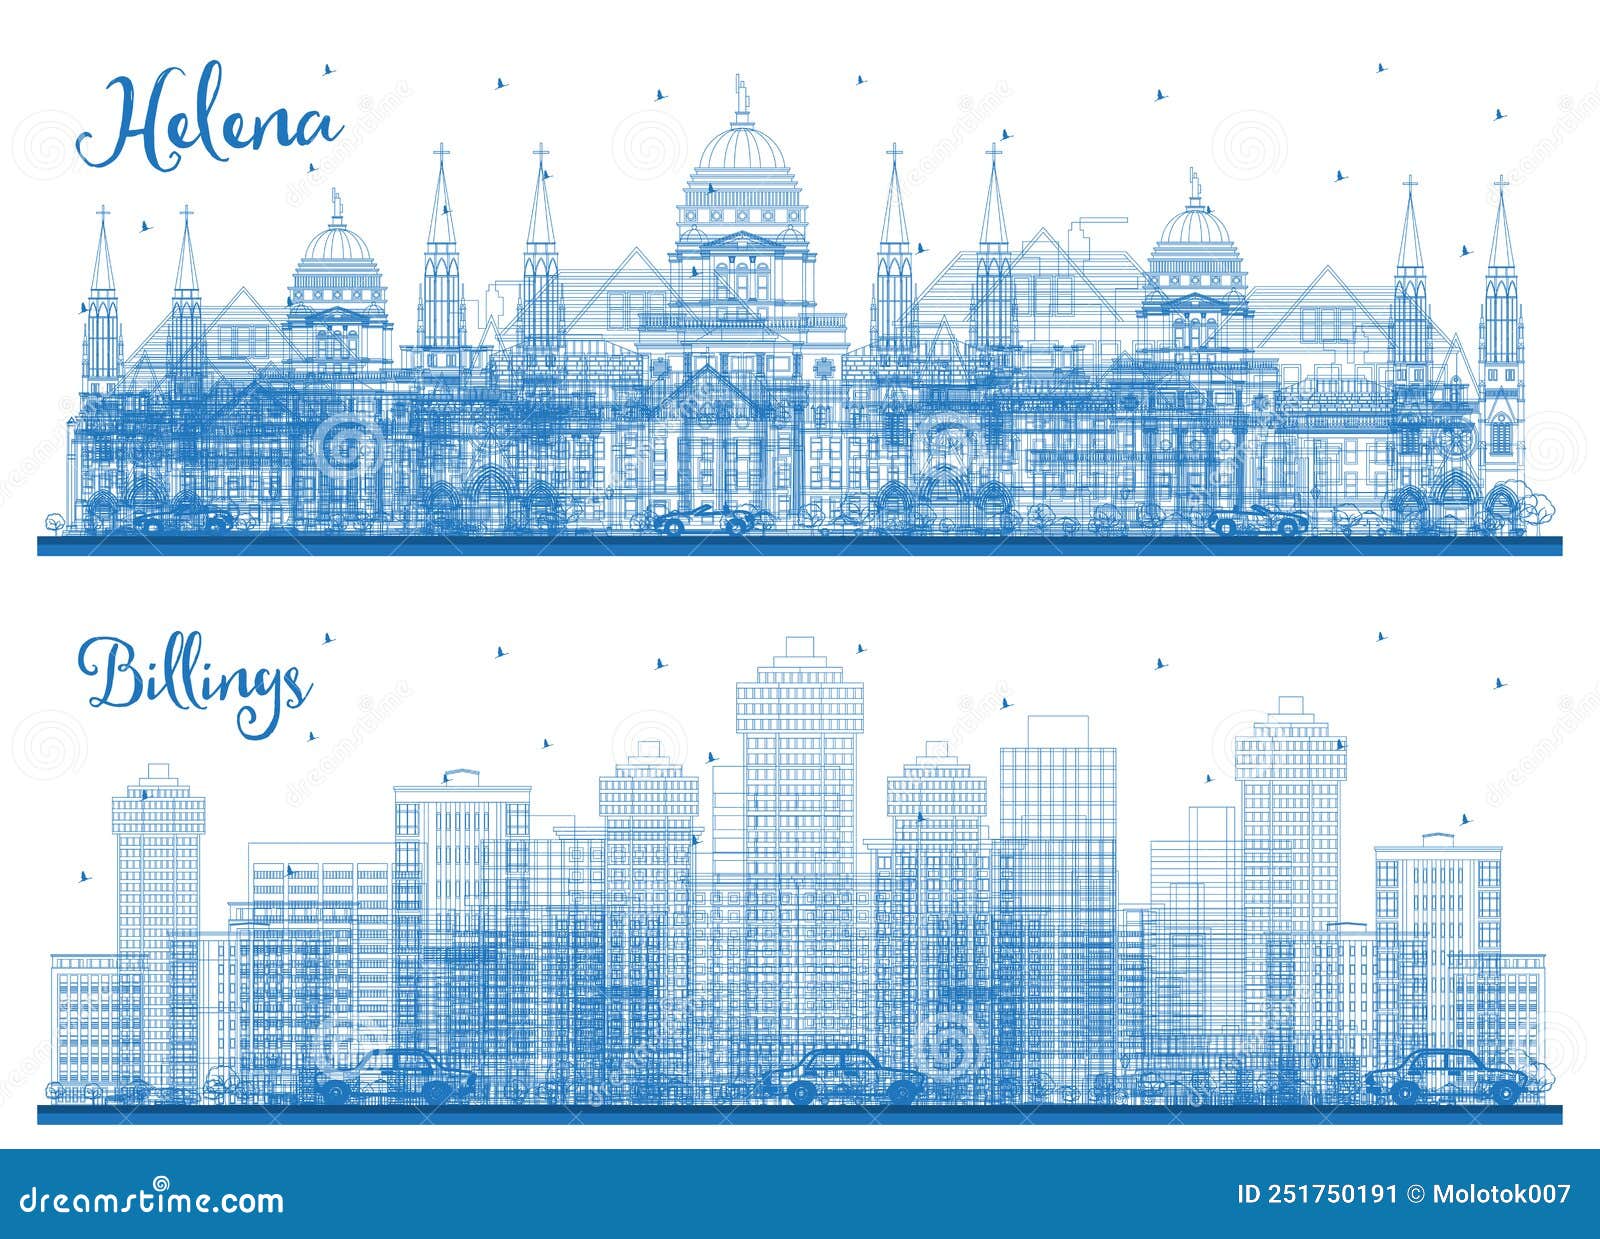 outline billings and helena montana city skyline set with blue buildings